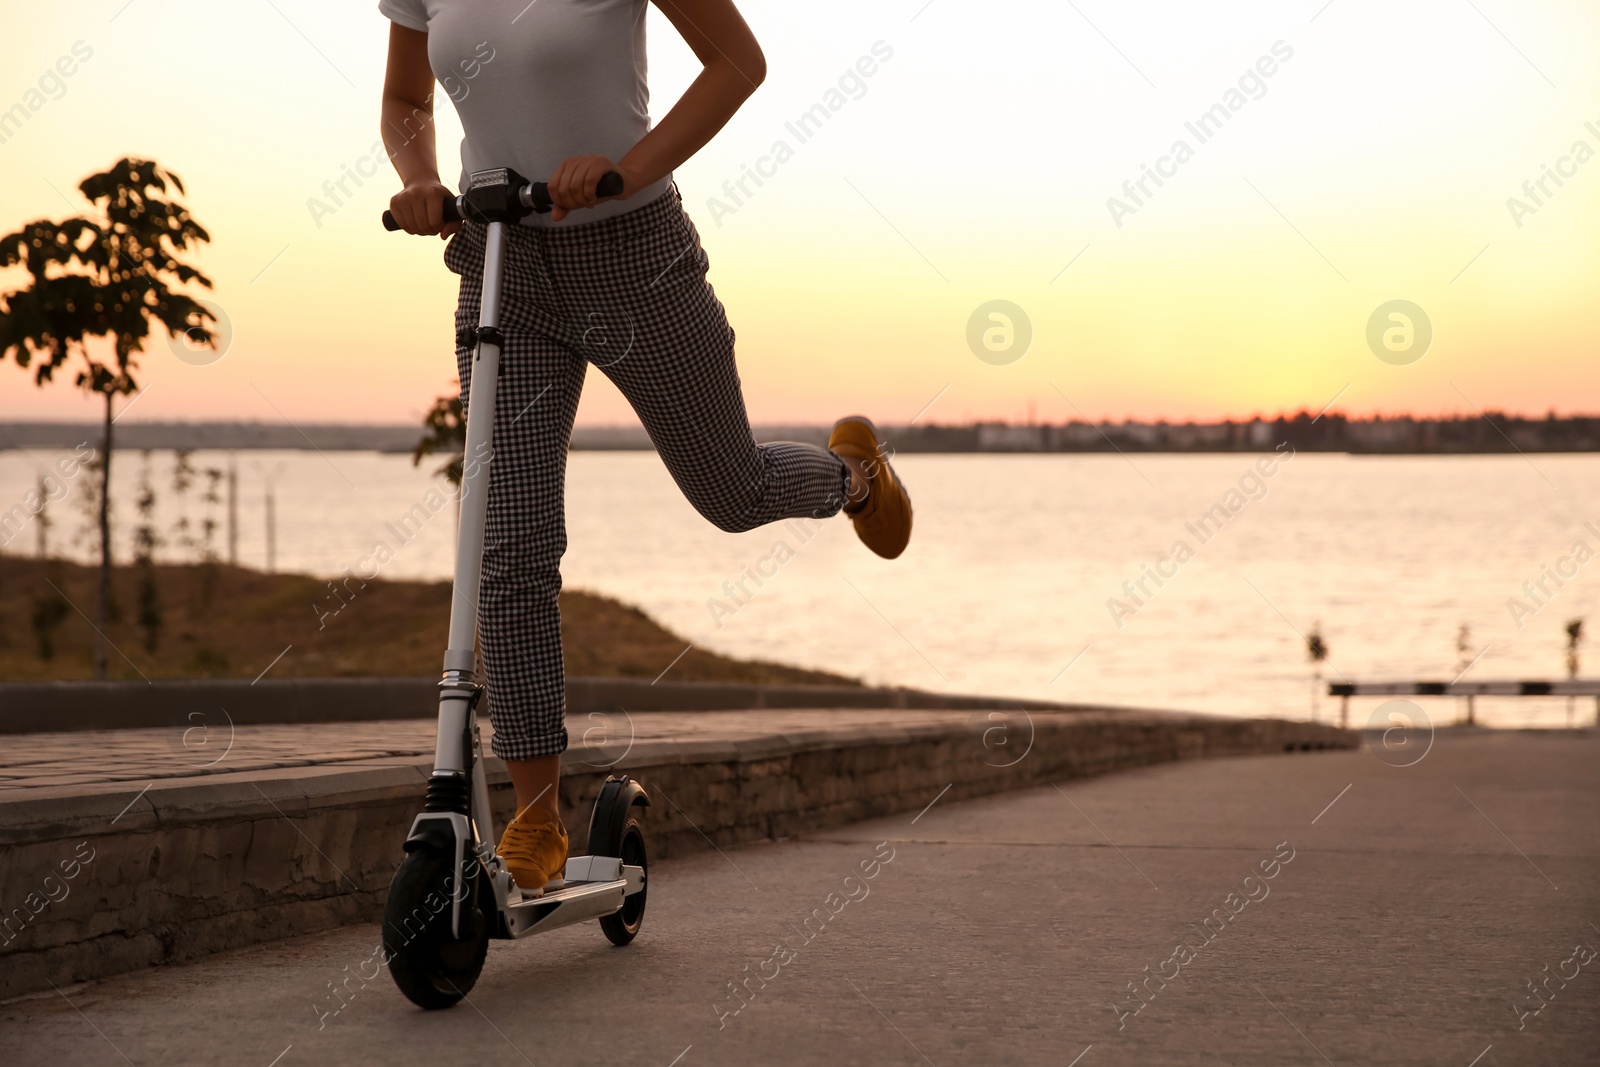 Photo of Woman riding electric kick scooter outdoors at sunset, closeup